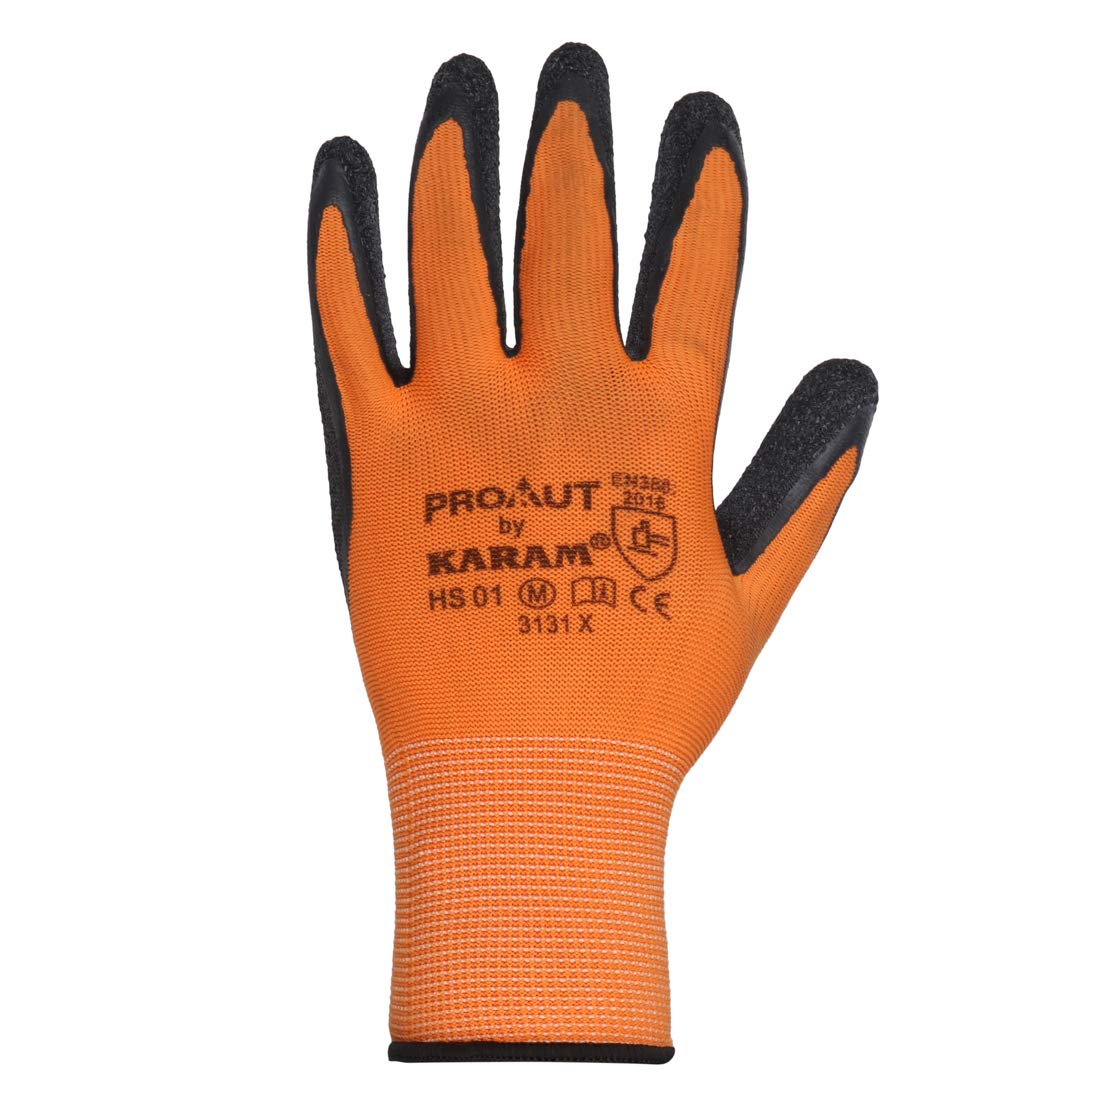 Karam Safety gloves hs 01 1